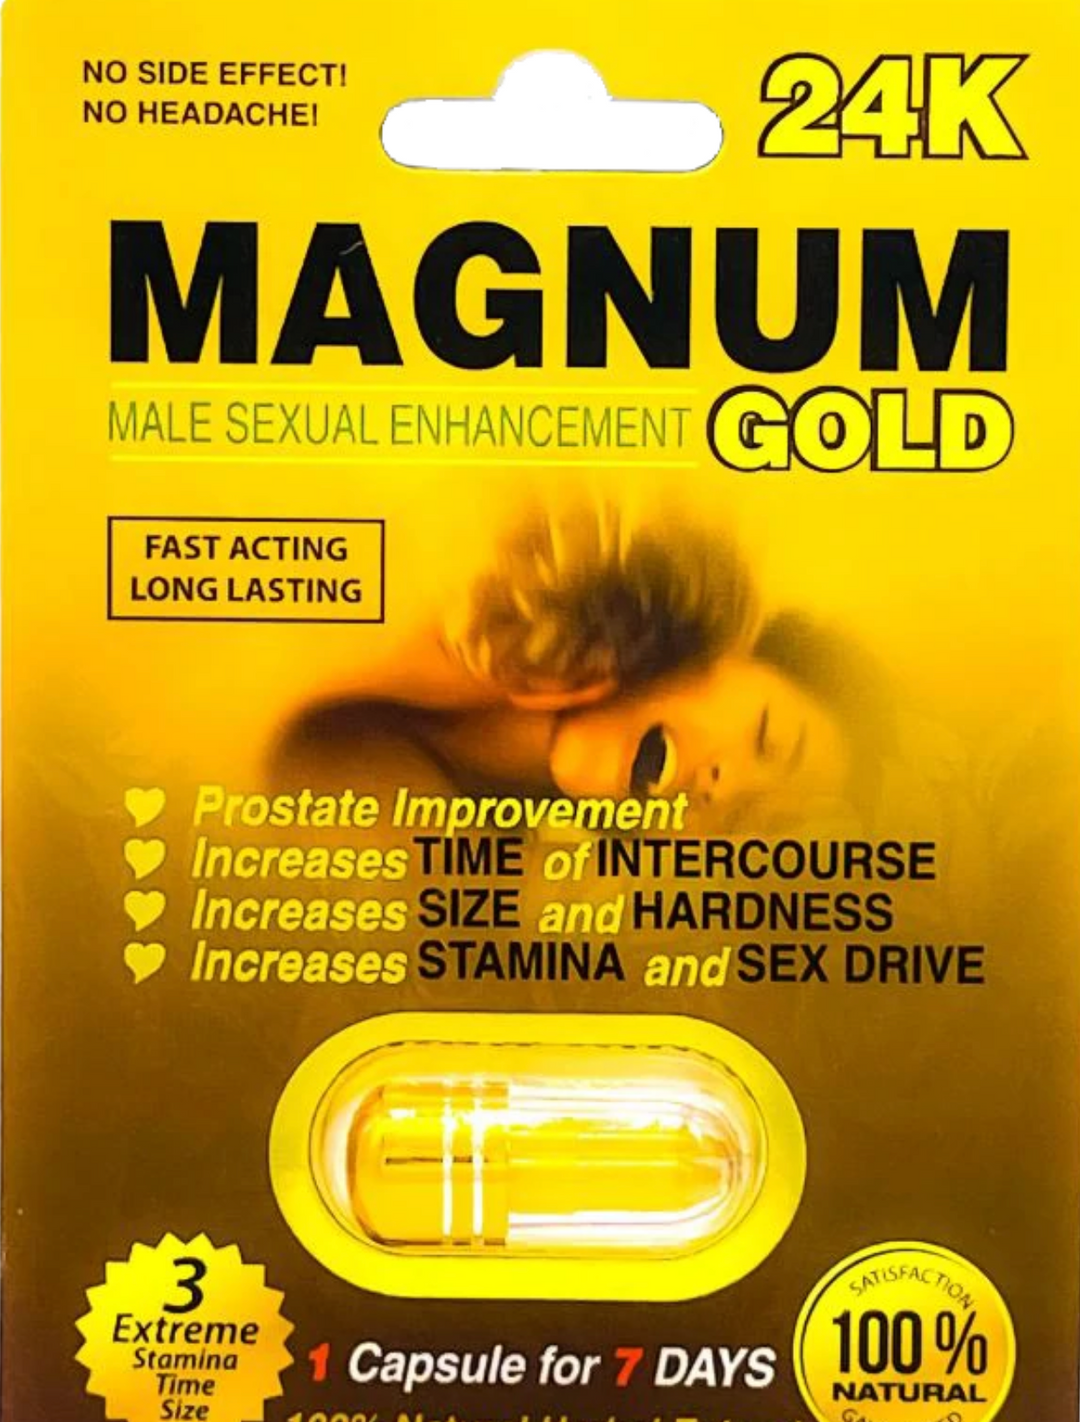 Magnum Gold male Sexual Enhancement